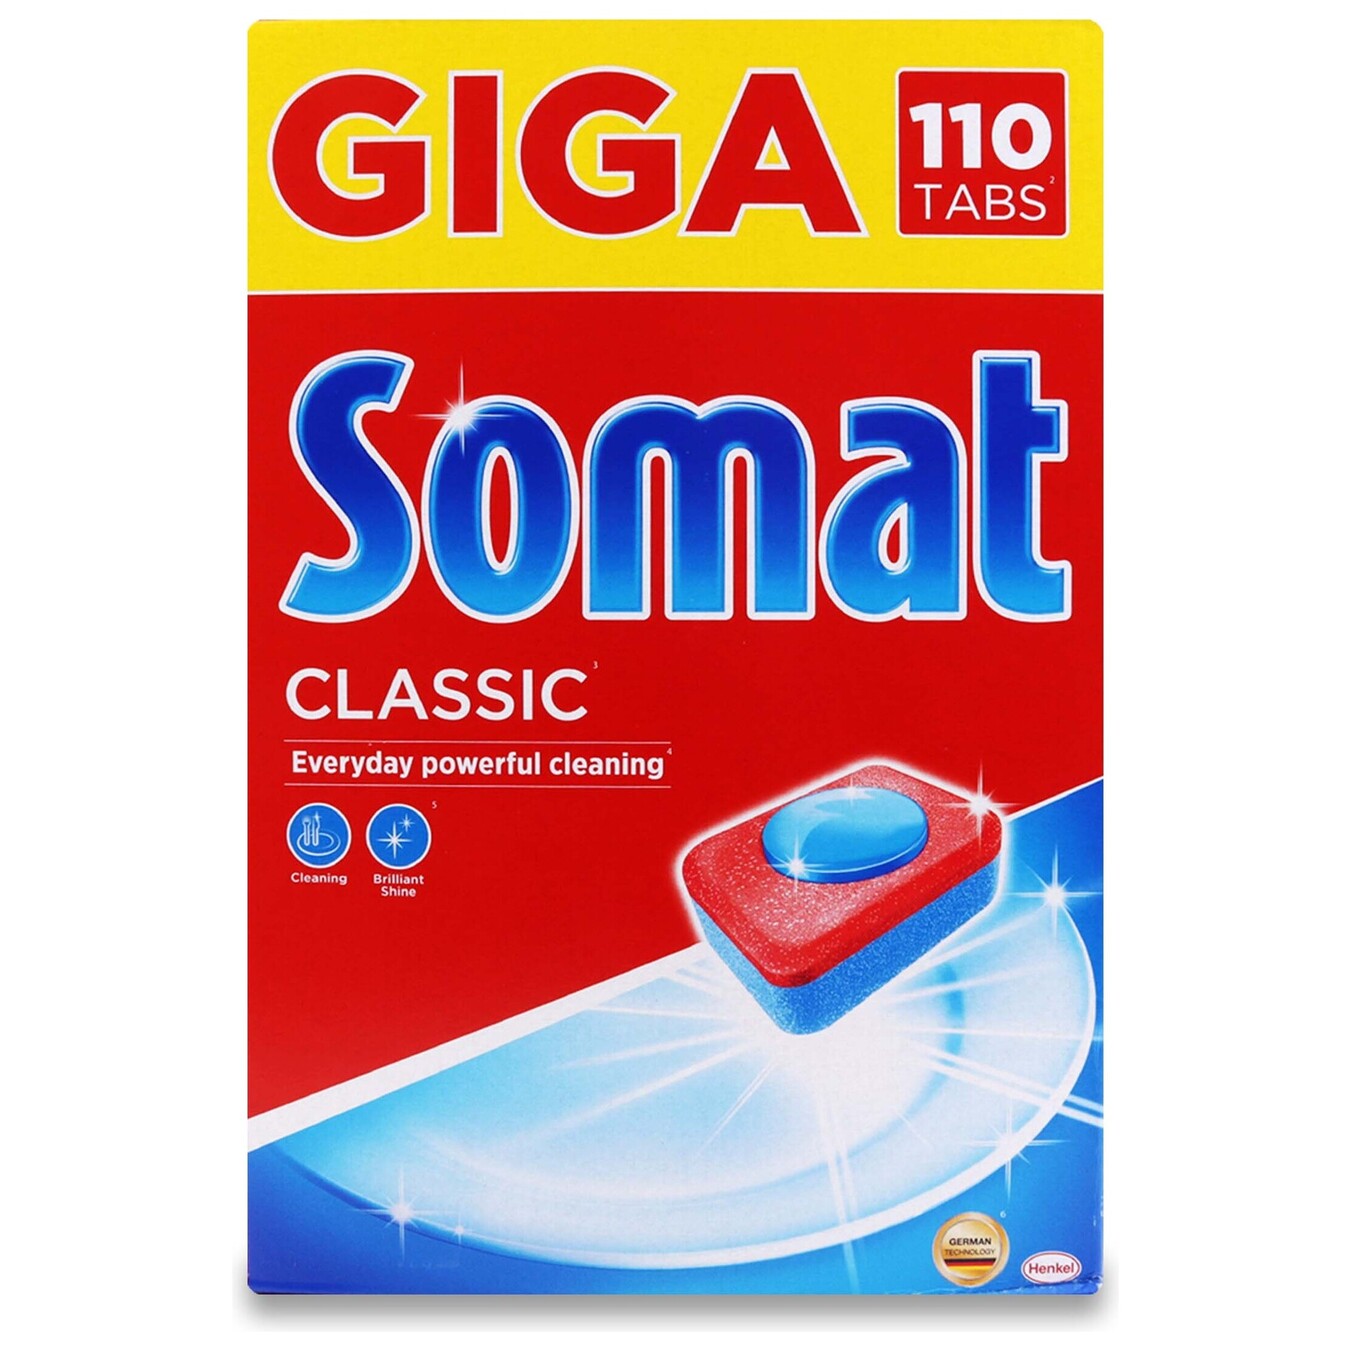 Somat Classic tablets for the dishwasher 110 pcs